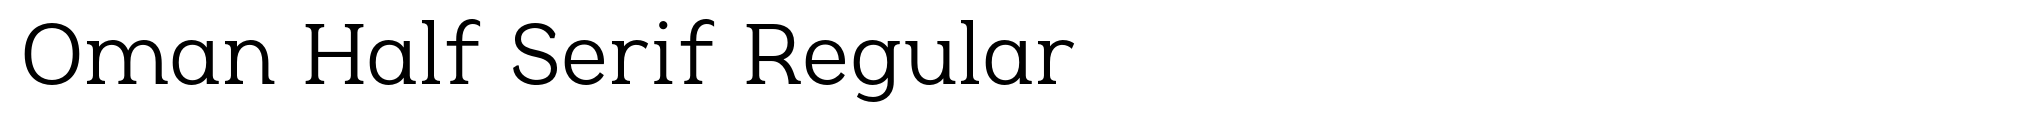 Oman Half Serif Regular image